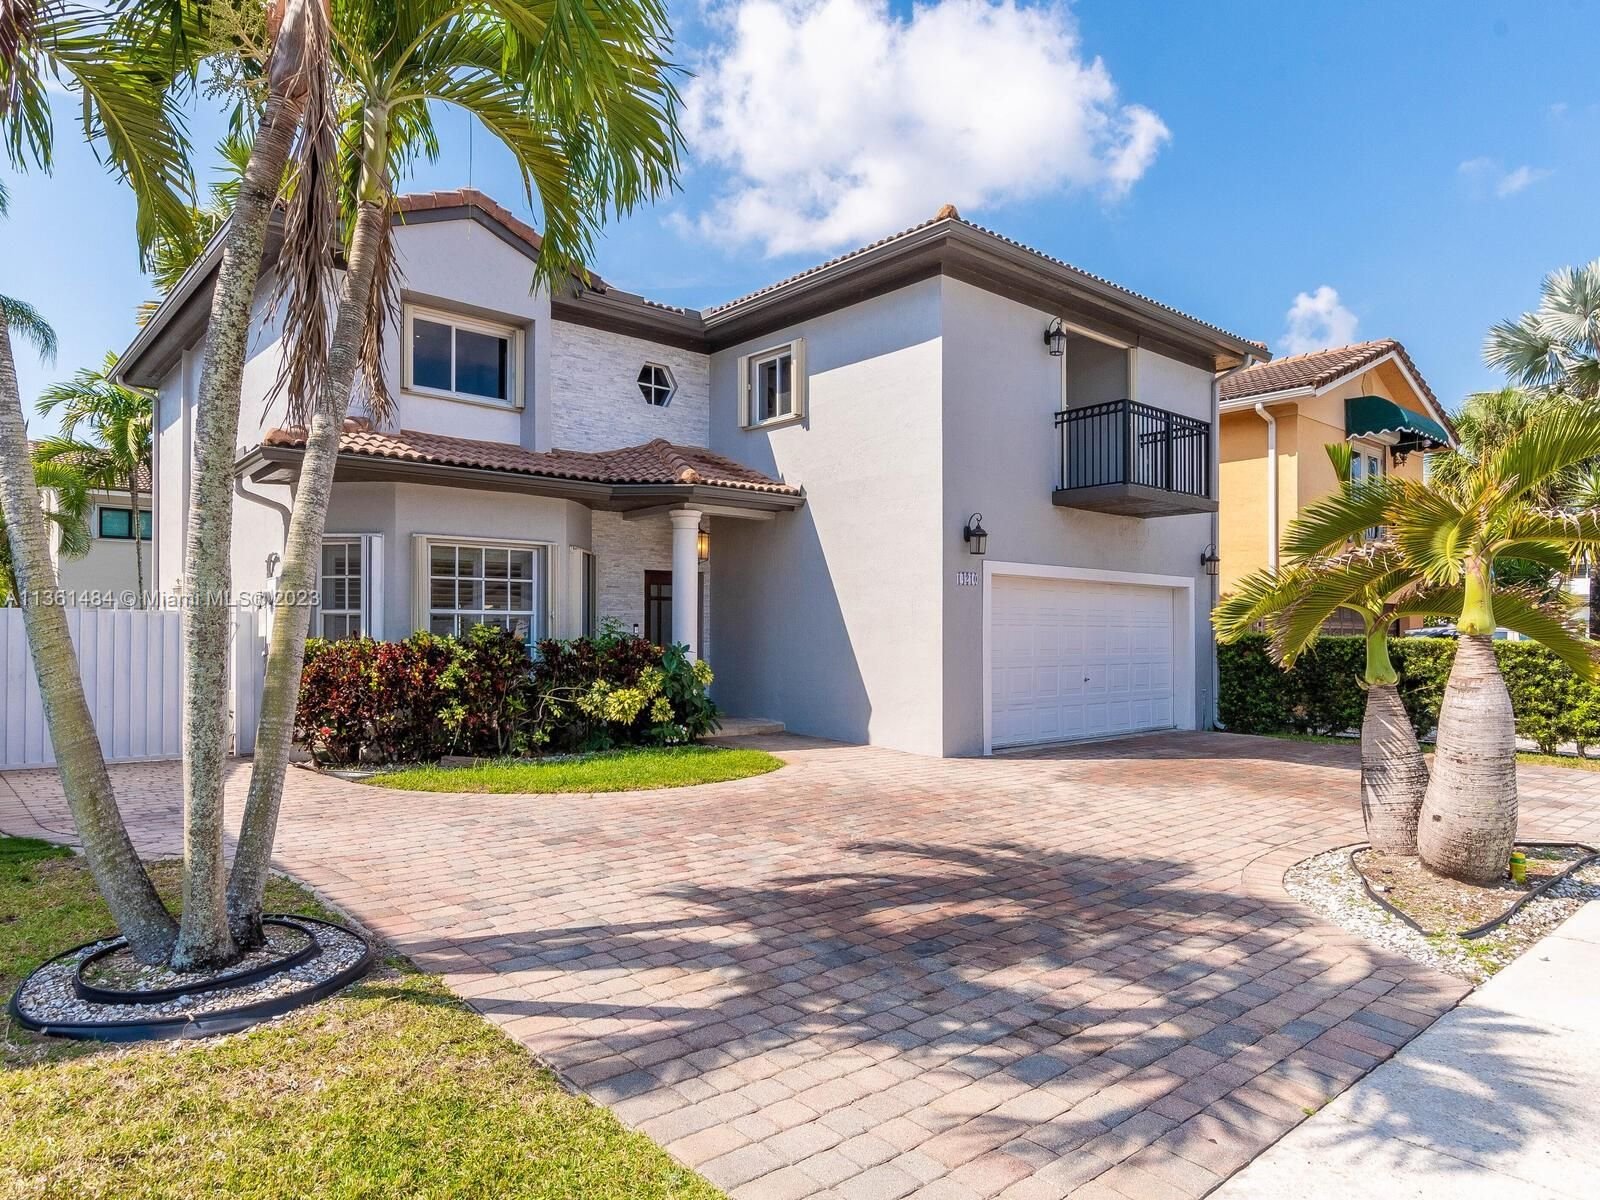 Real estate property located at 14210 116th Ter, Miami-Dade County, Miami, FL